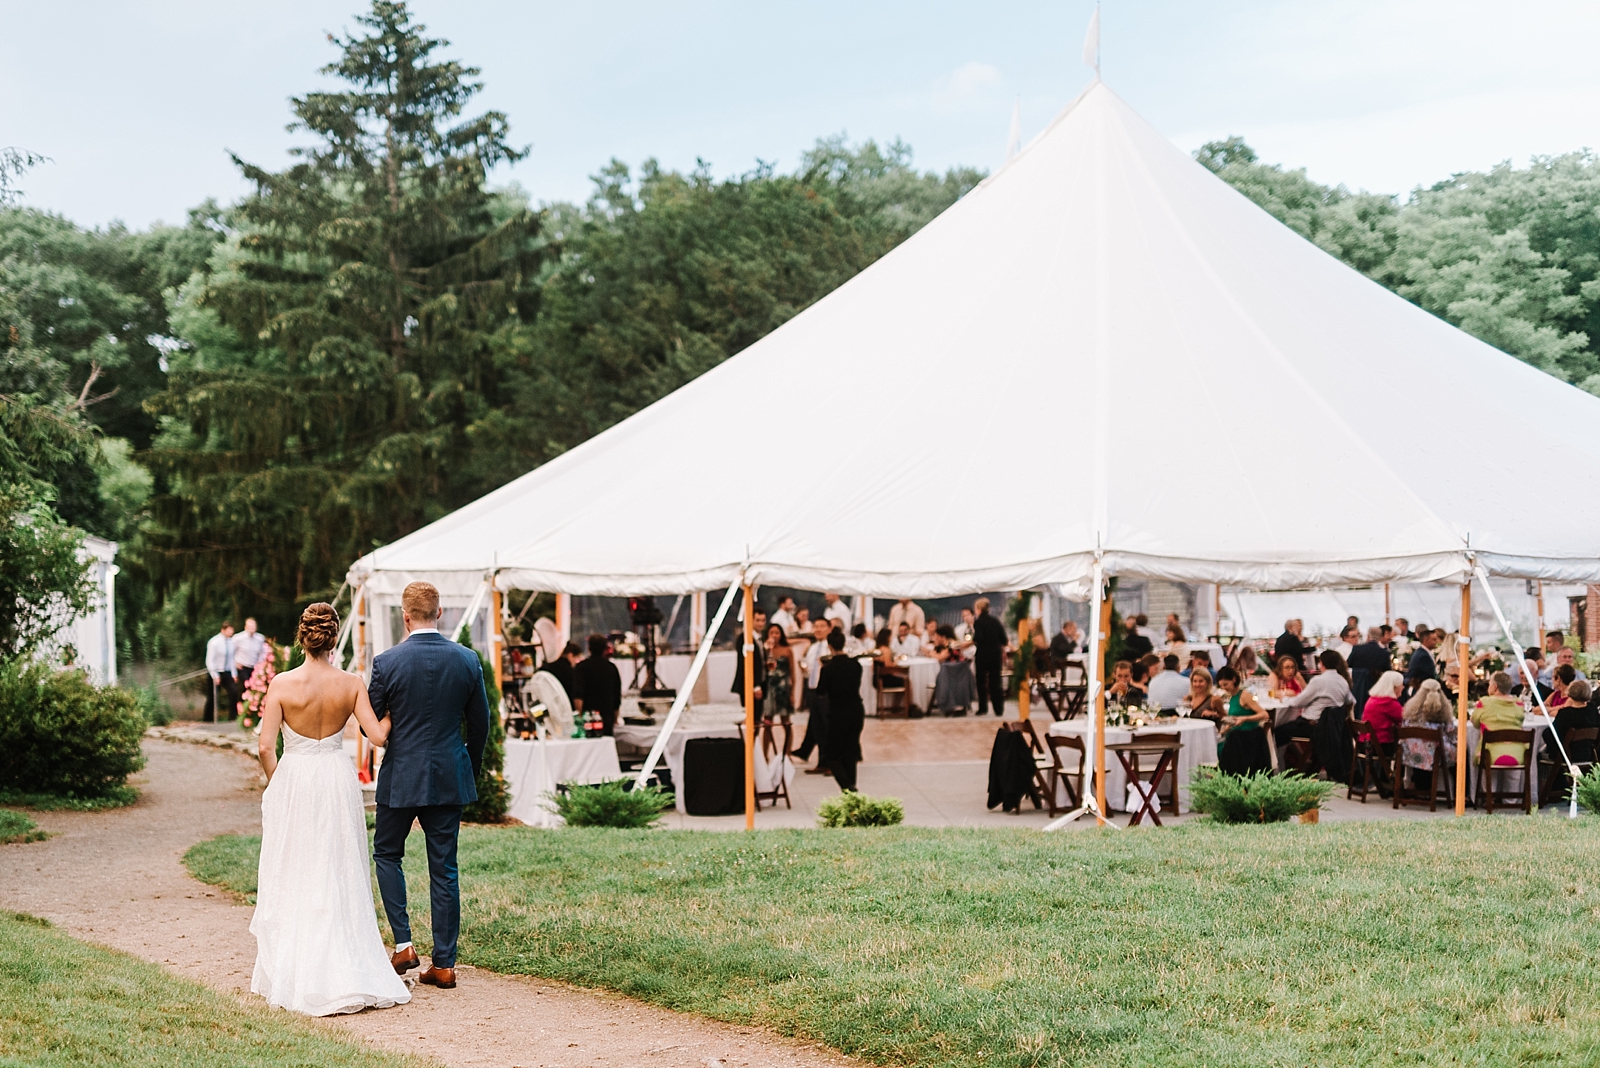 Garden Inspired Summer Wedding at Glen Magna Farms in Danvers, MA by Boston Wedding Photographer Annmarie Swift